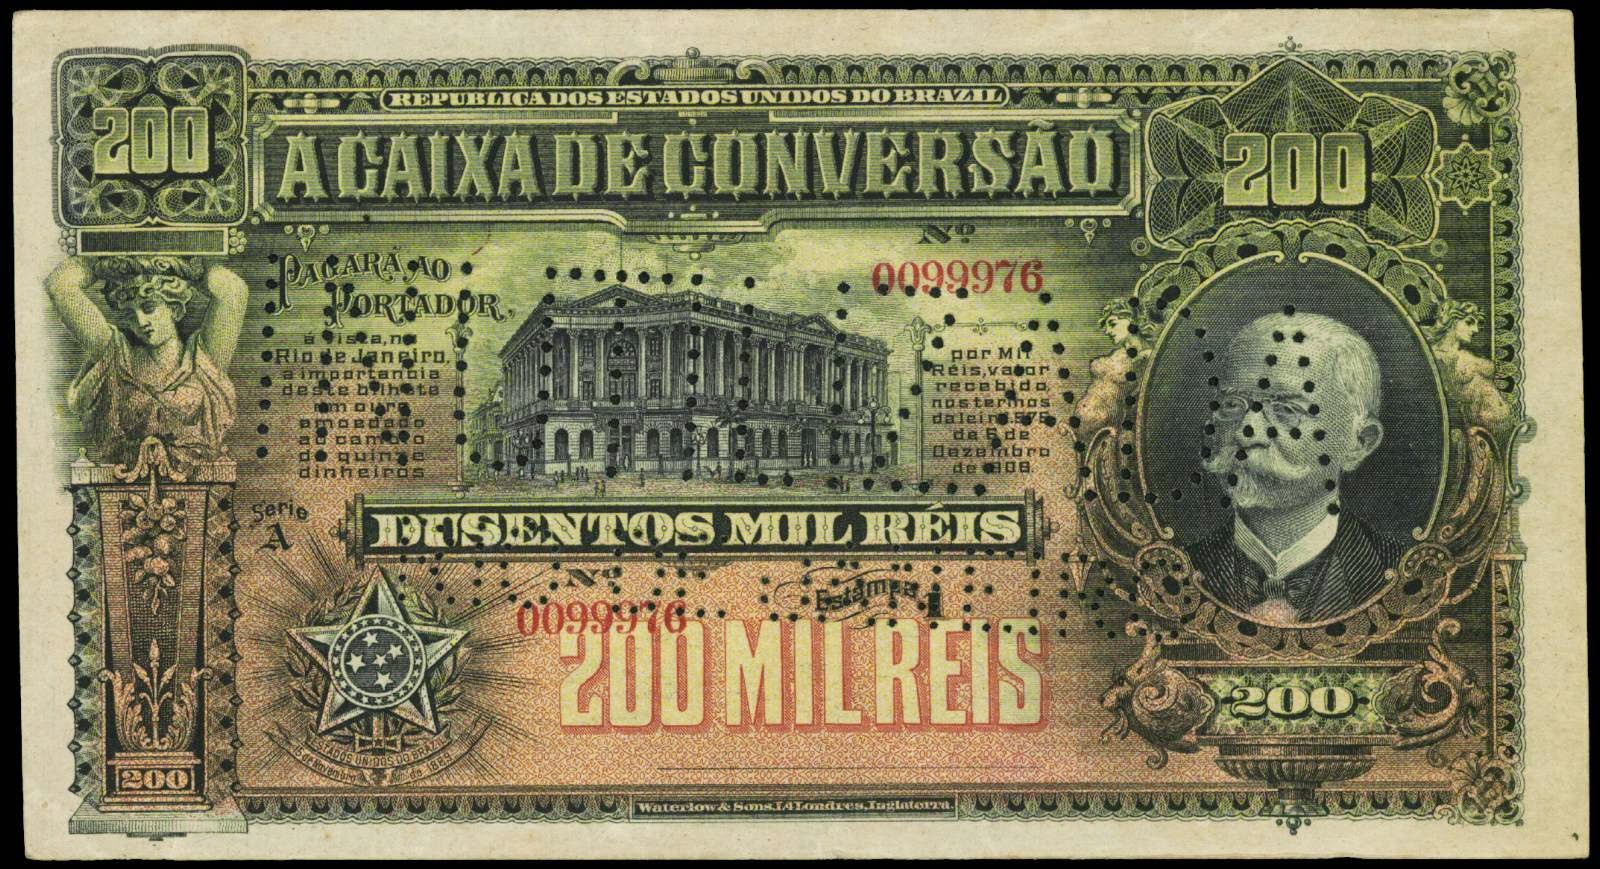 Brazil banknotes 200 Mil Reis Caixa de Conversao, Afonso Pena